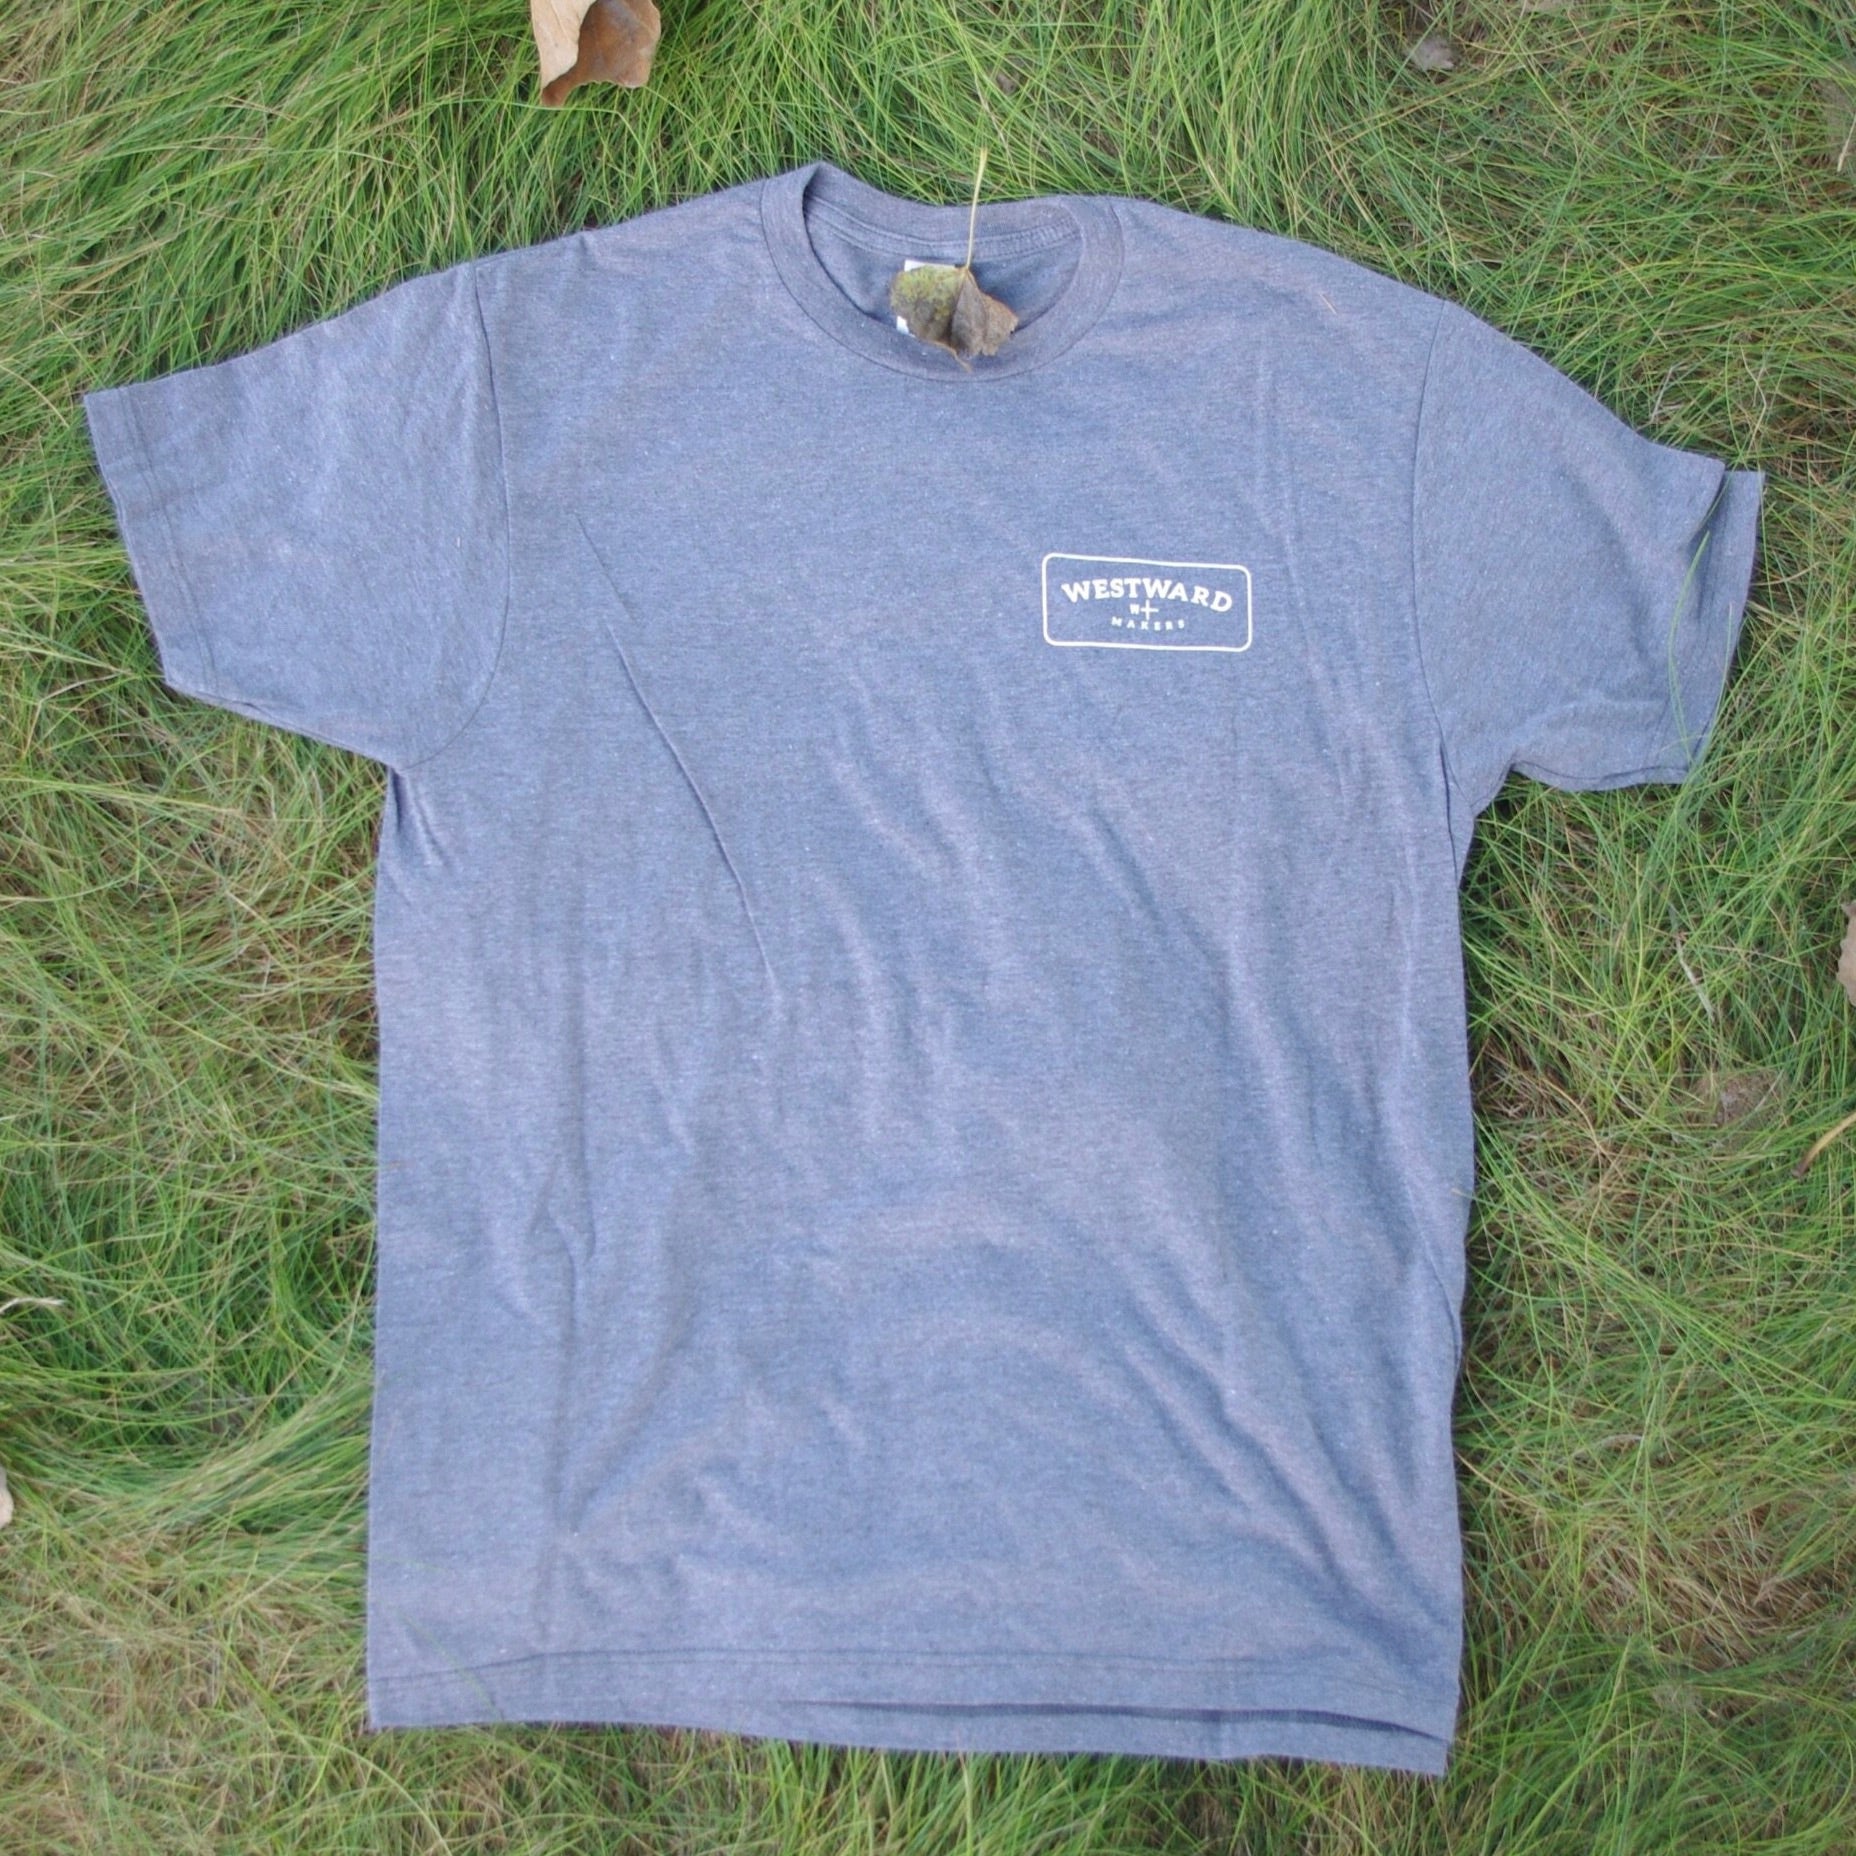 Westward Makers Classic Men's T-Shirt Grey with Pocket Logo Design